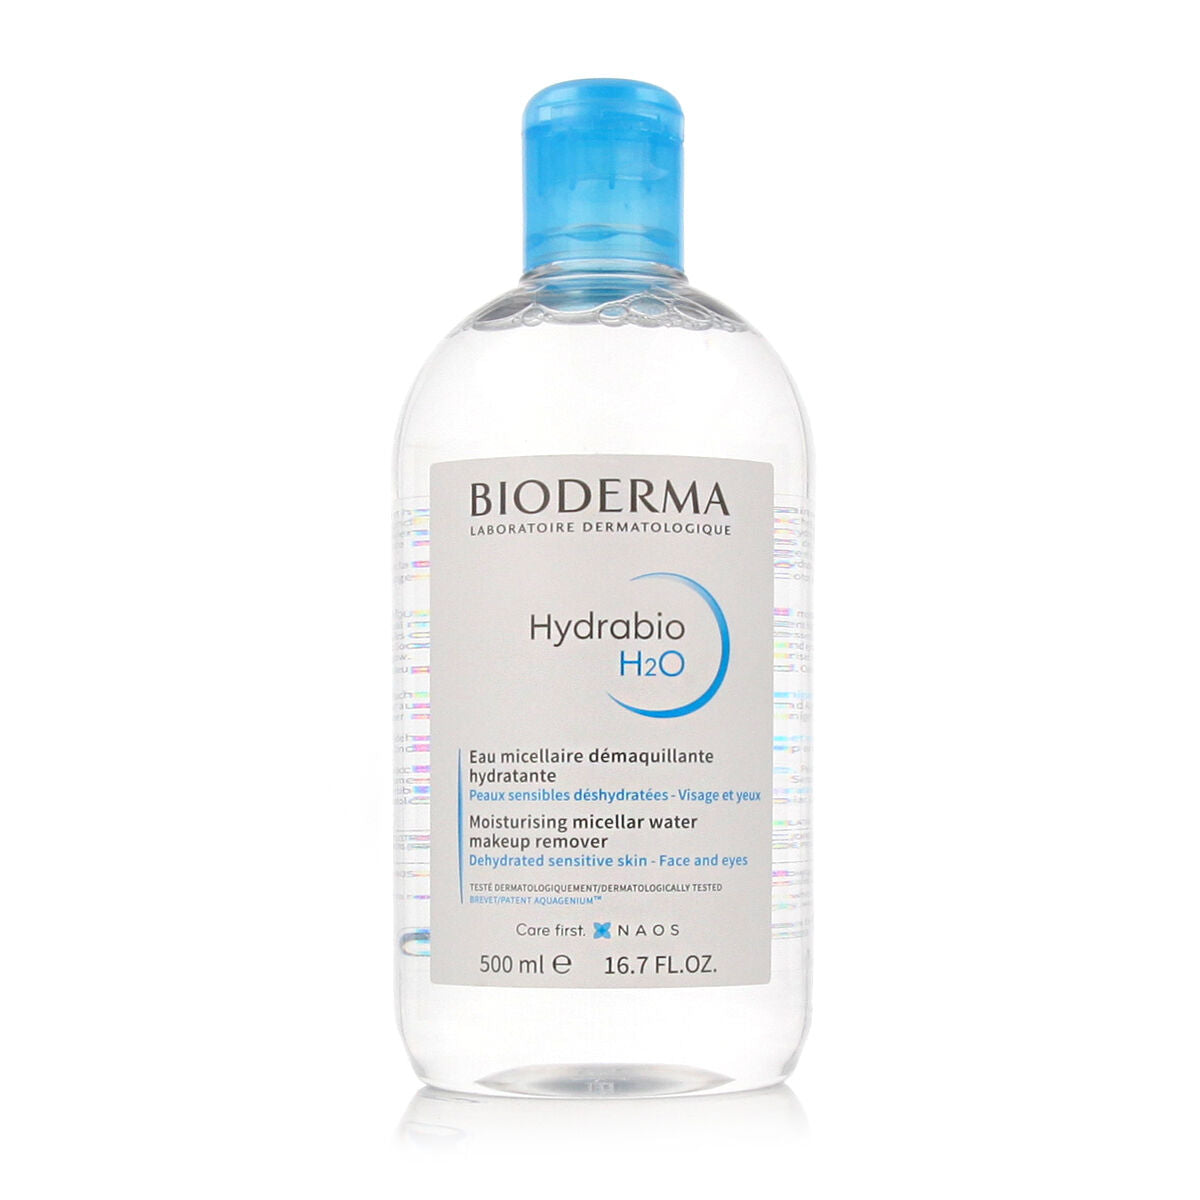 Make Up Remover Micellar Water Bioderma Hydrabio H2O 500 ml